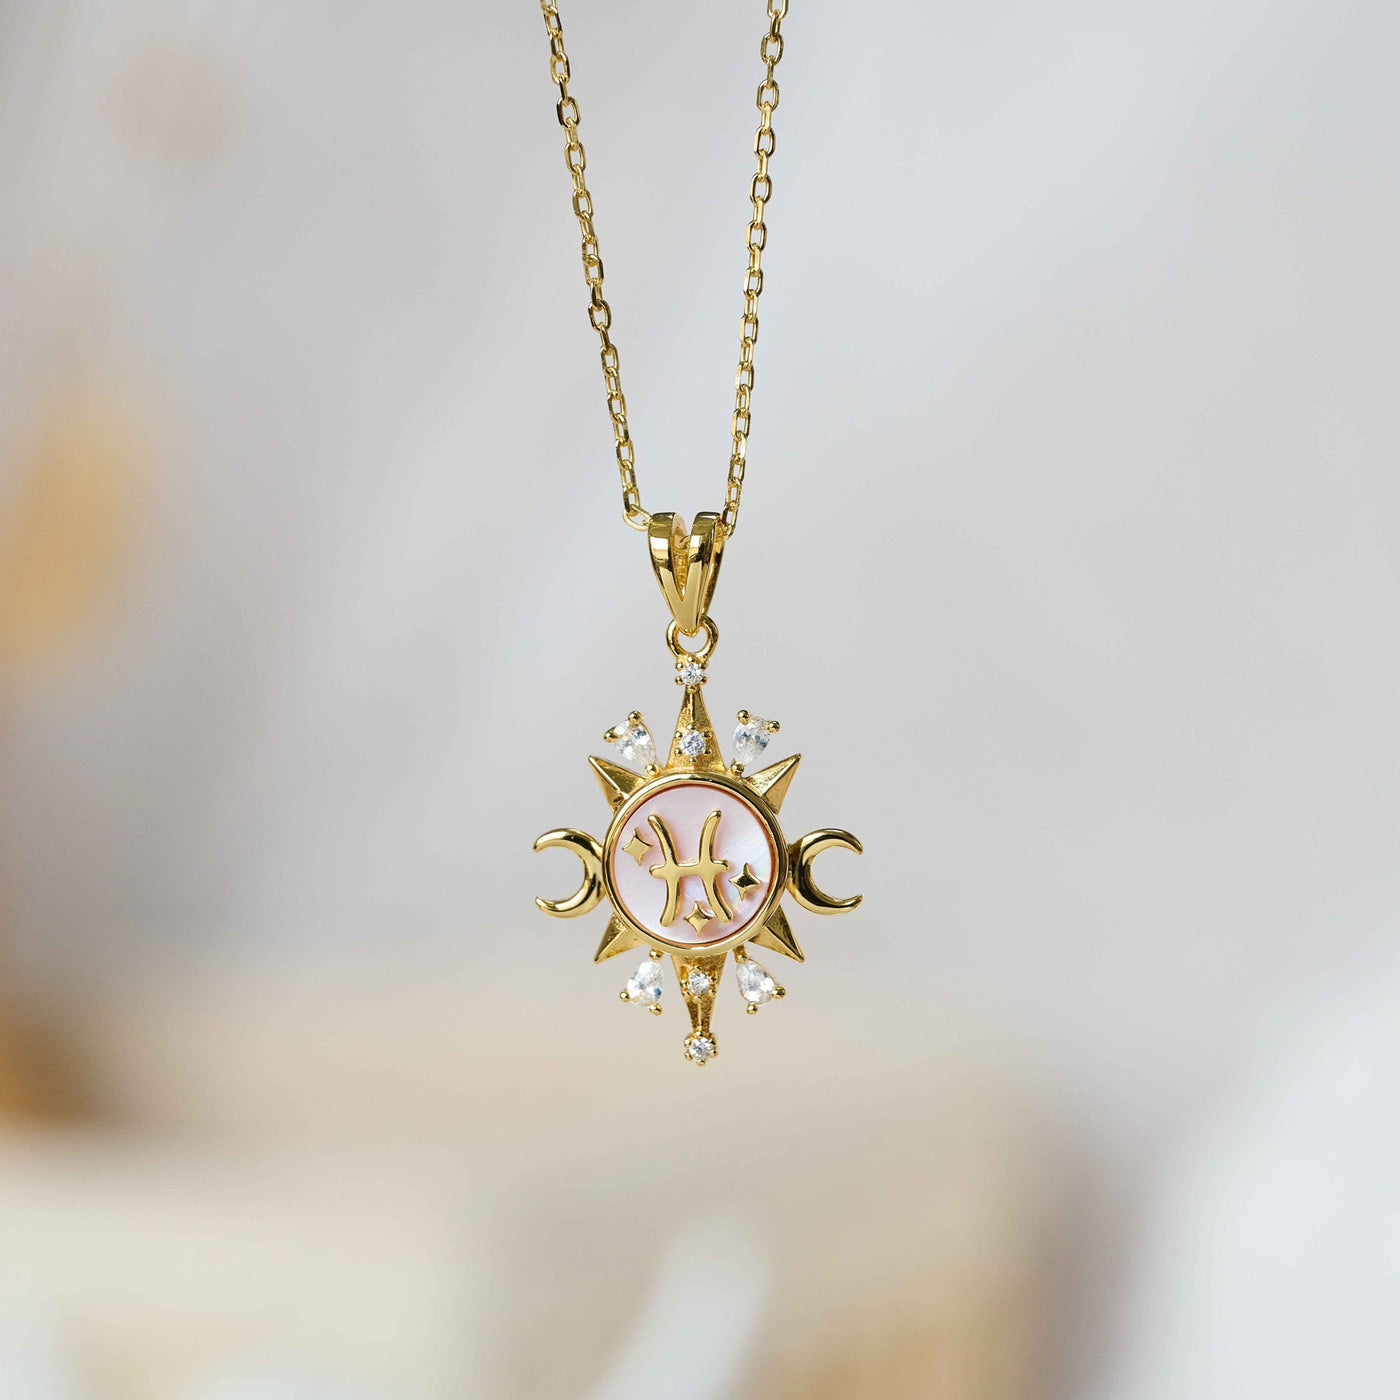 Celestial Horoscope Pendant - Pisces - Necklaces - 1